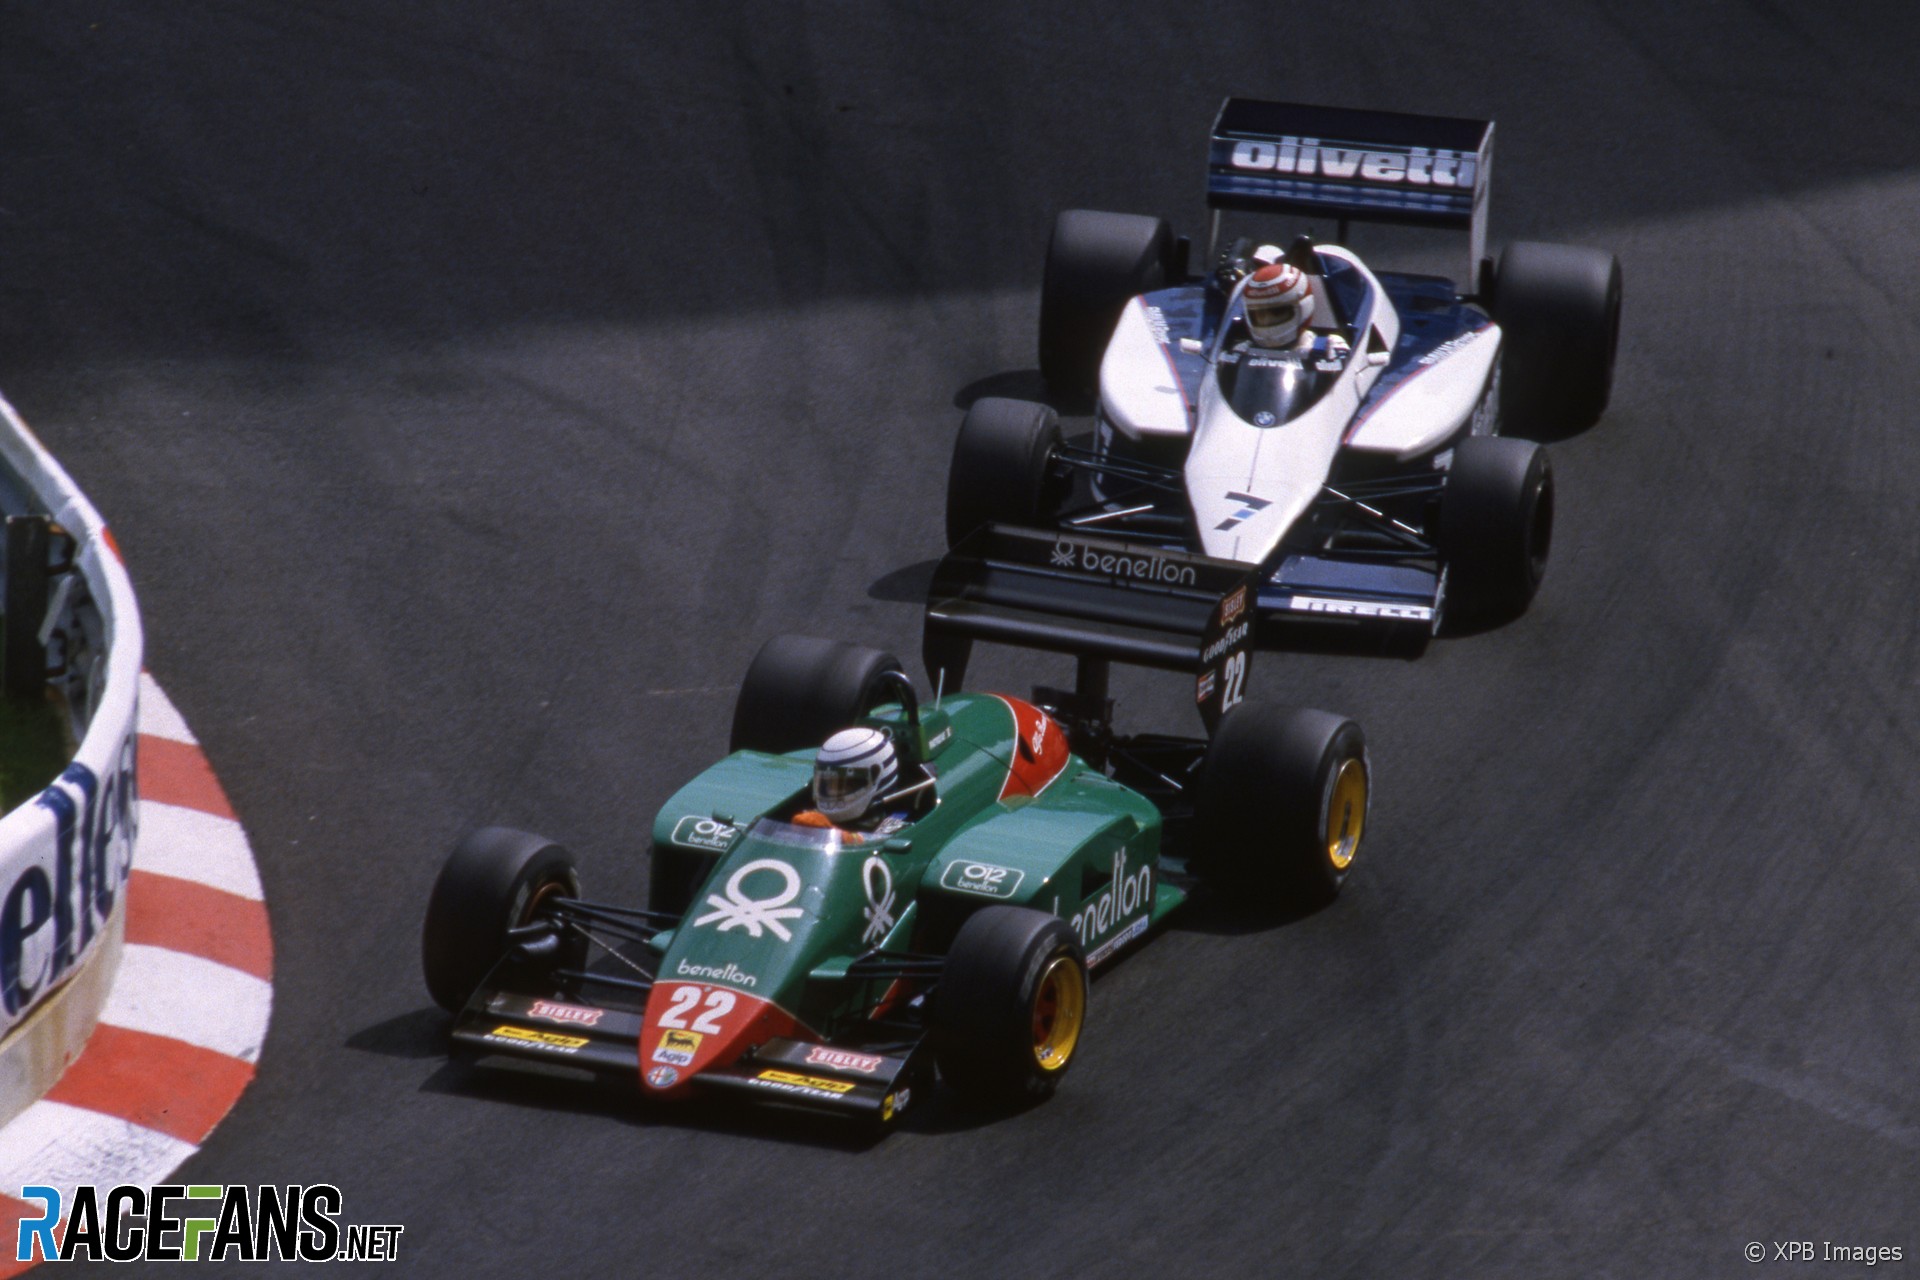 Riccardo Patrese, Nelson Piquet, Monaco, 1985